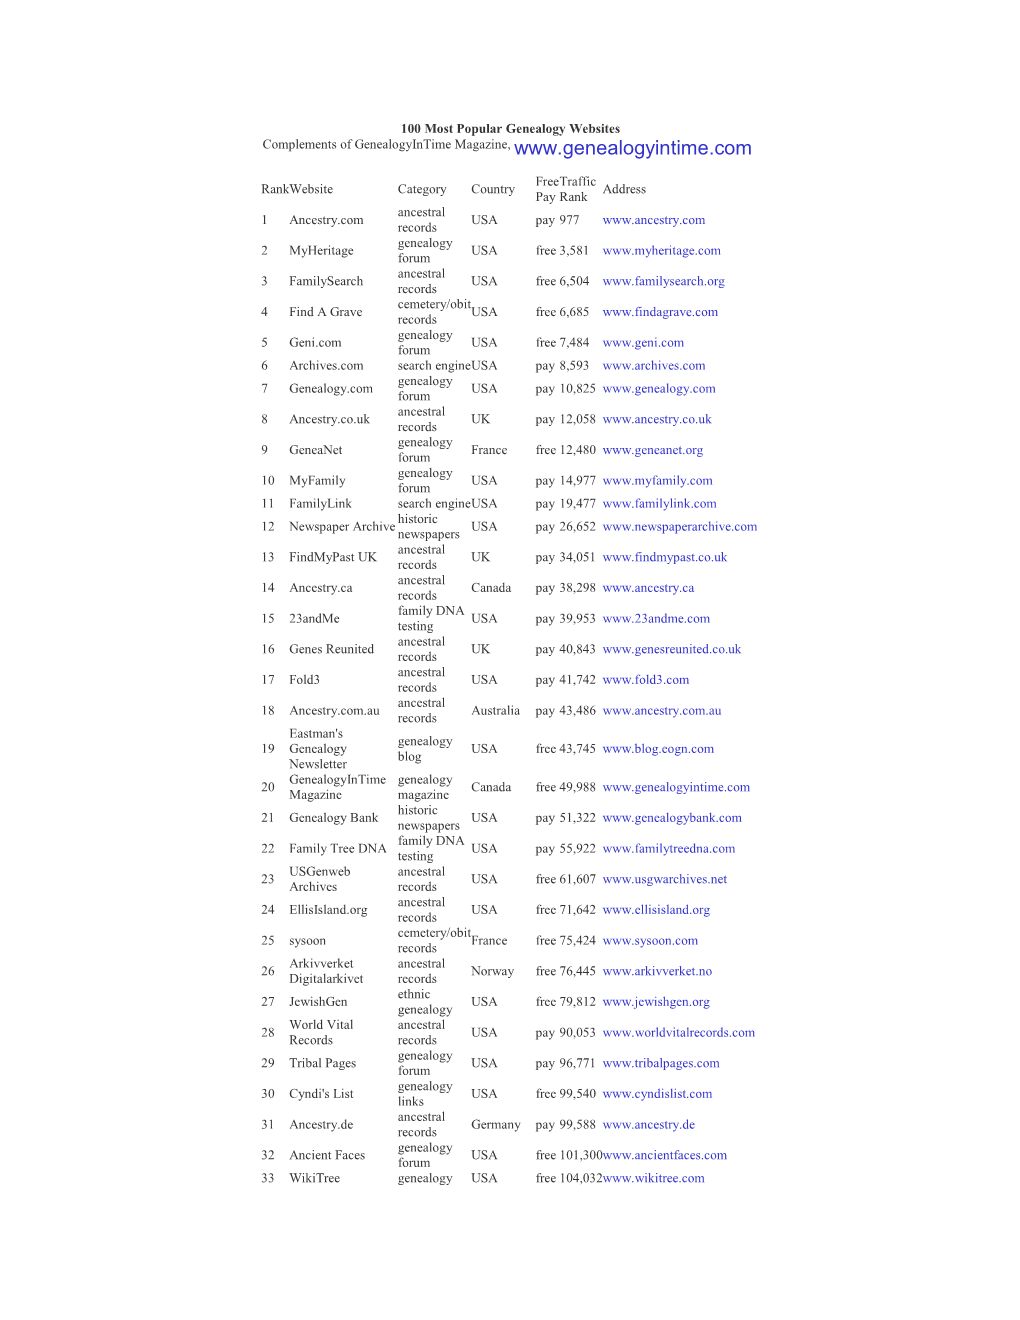 100 Most Popular Genealogy Websites Complements of Genealogyintime Magazine